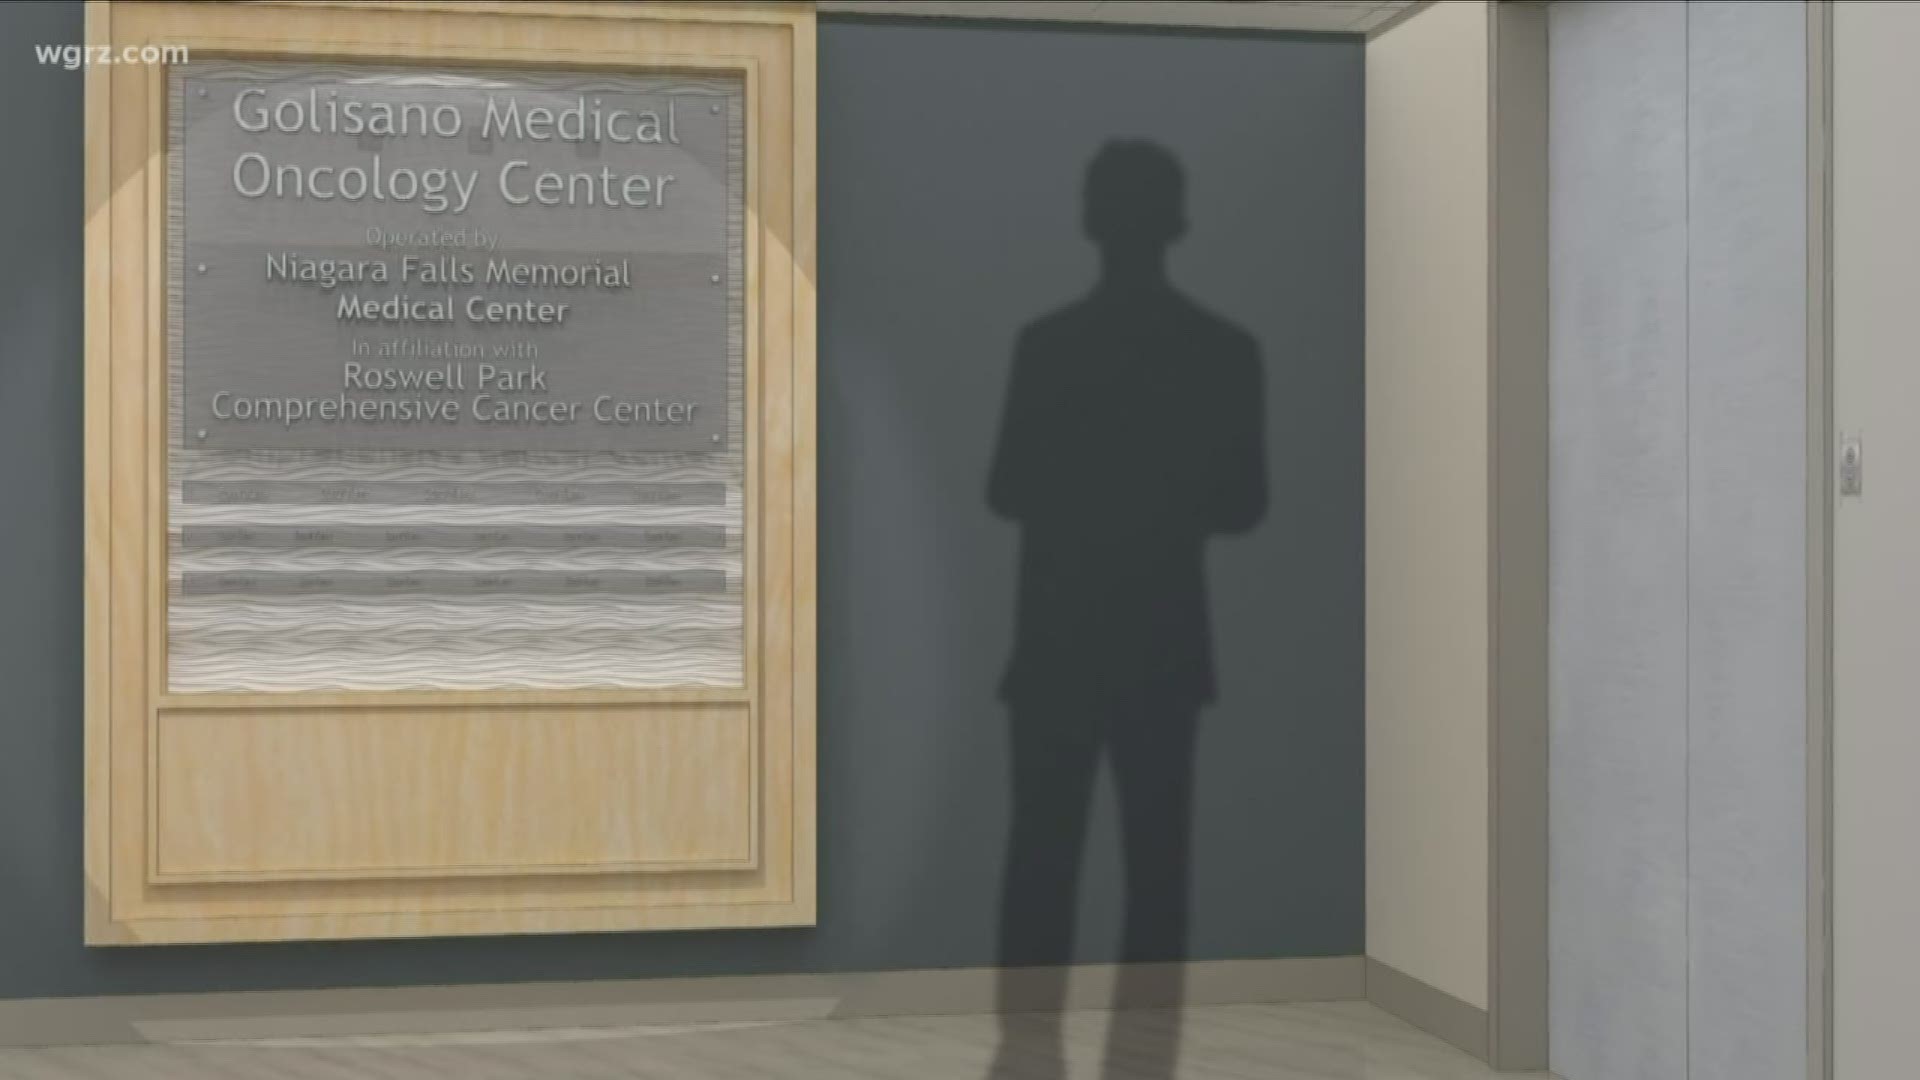 New cancer center coming to Niagara county